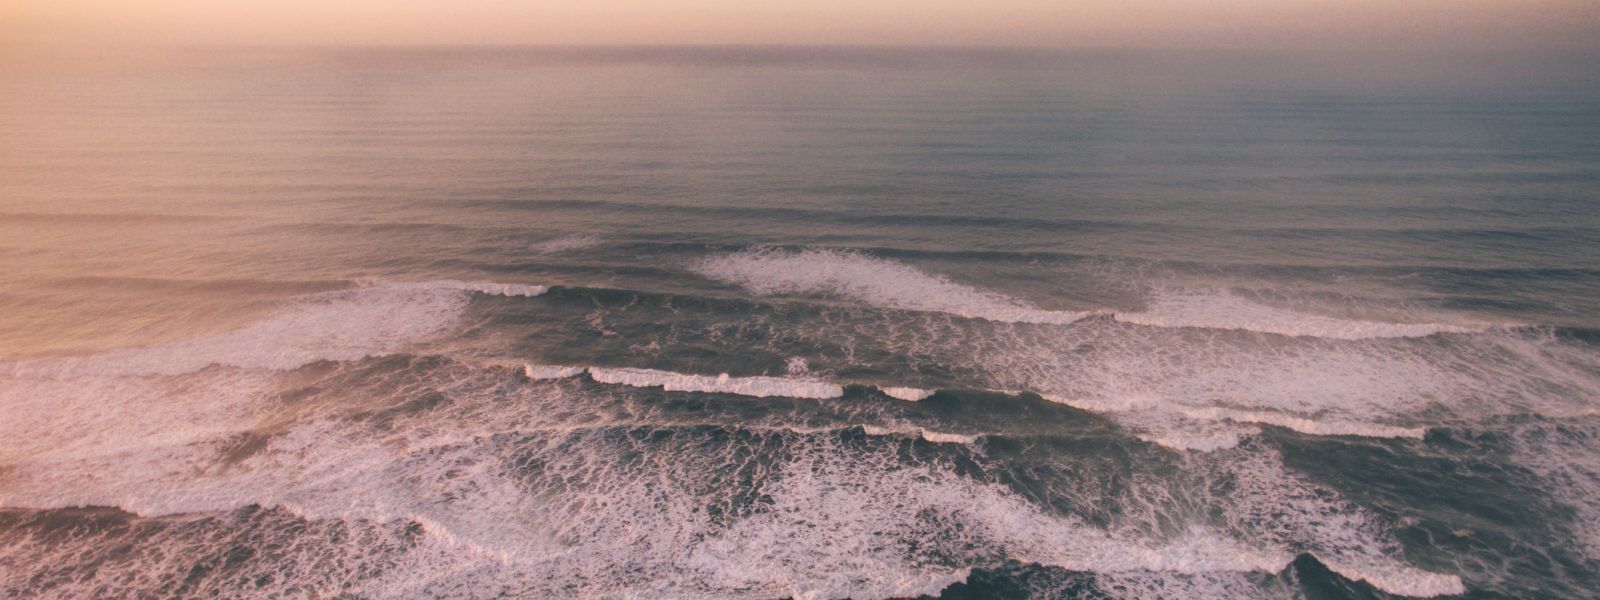 Waves approaching the shoreline. Credit: Mario Guti